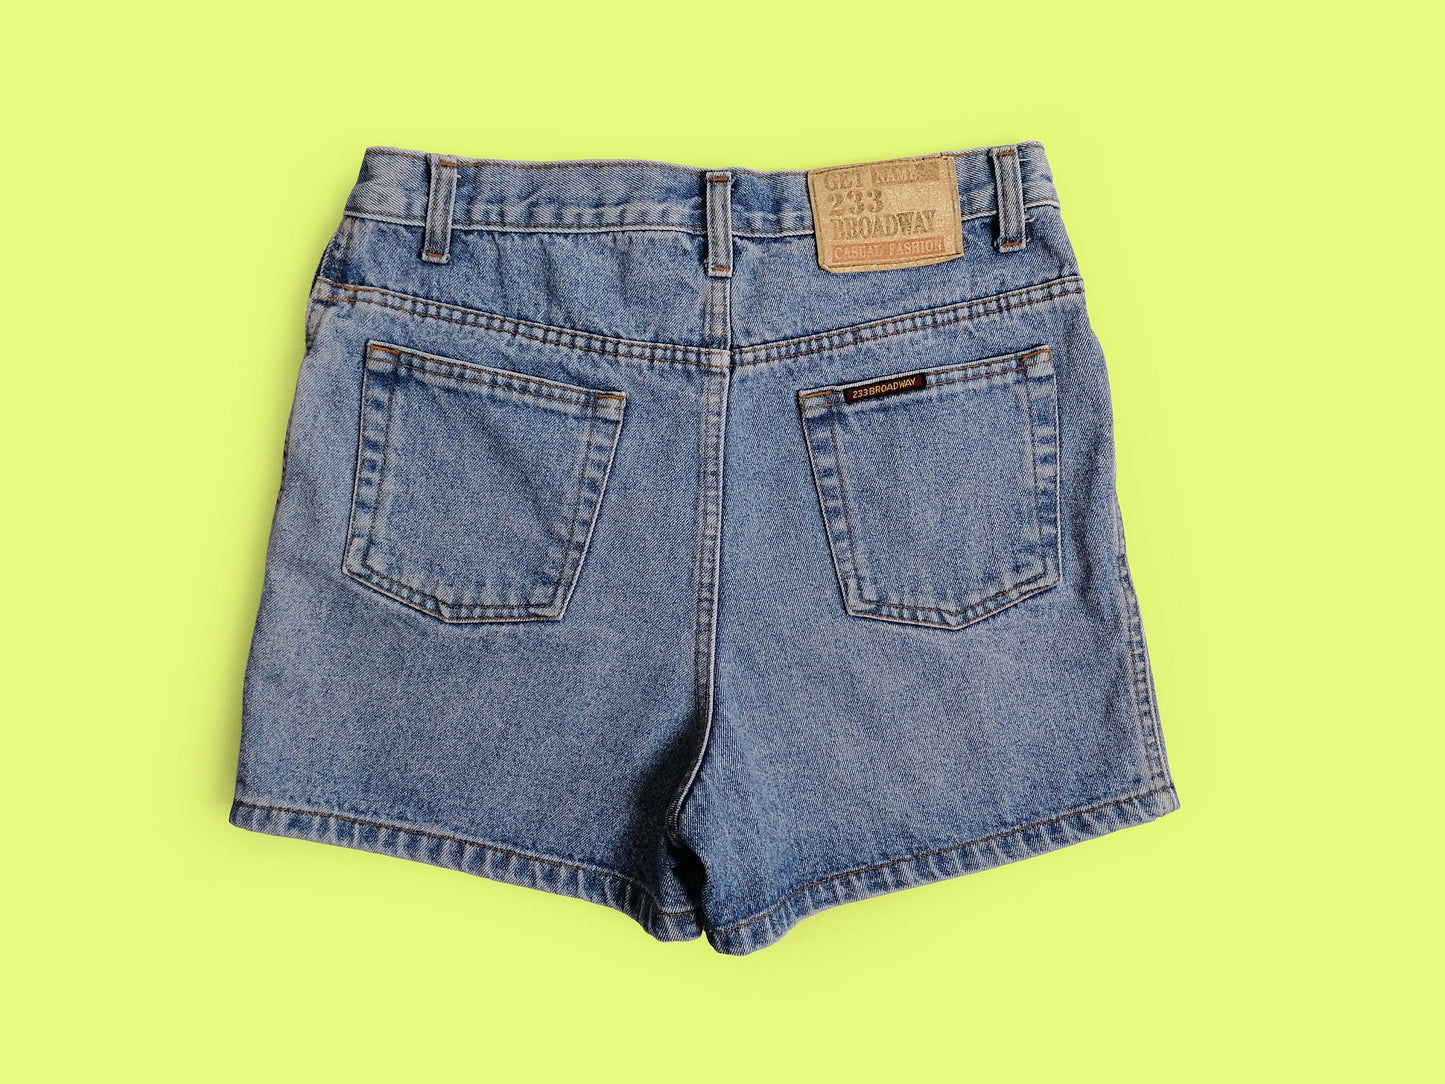 Vintage 90's 233 Broadway Denim Shorts ~ size S-M